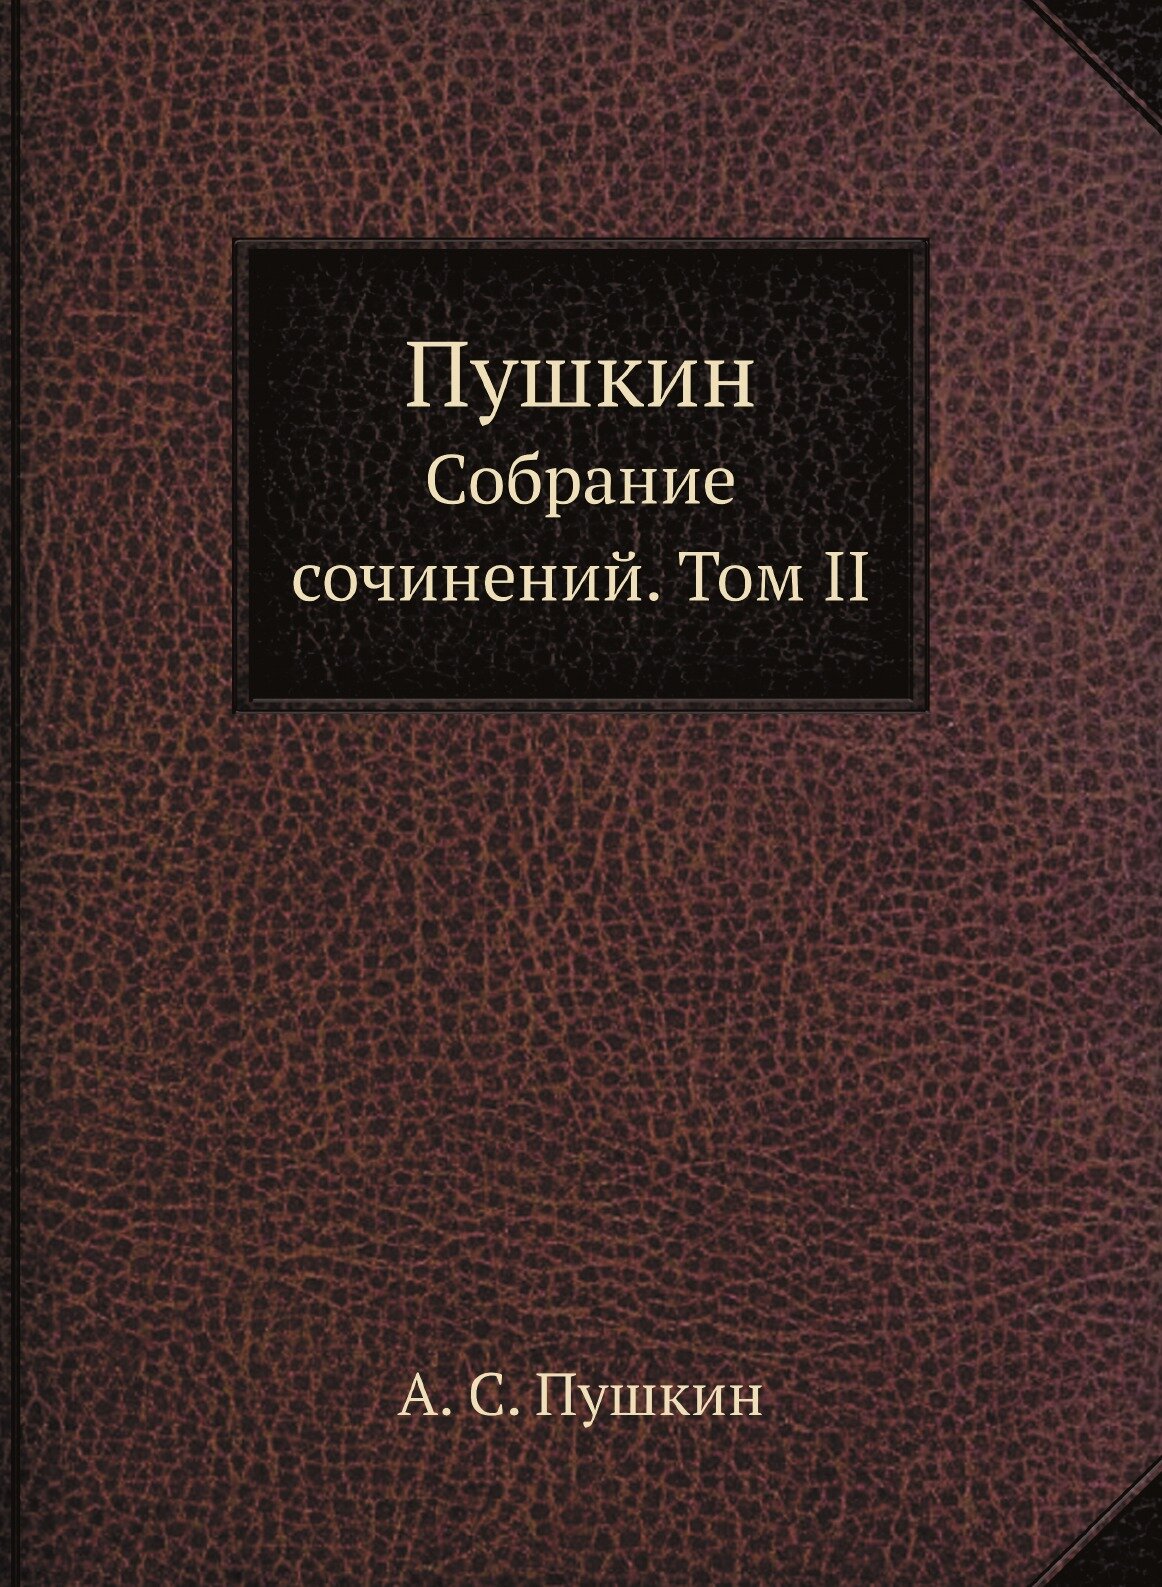 Пушкин. Собрание сочинений. Том II